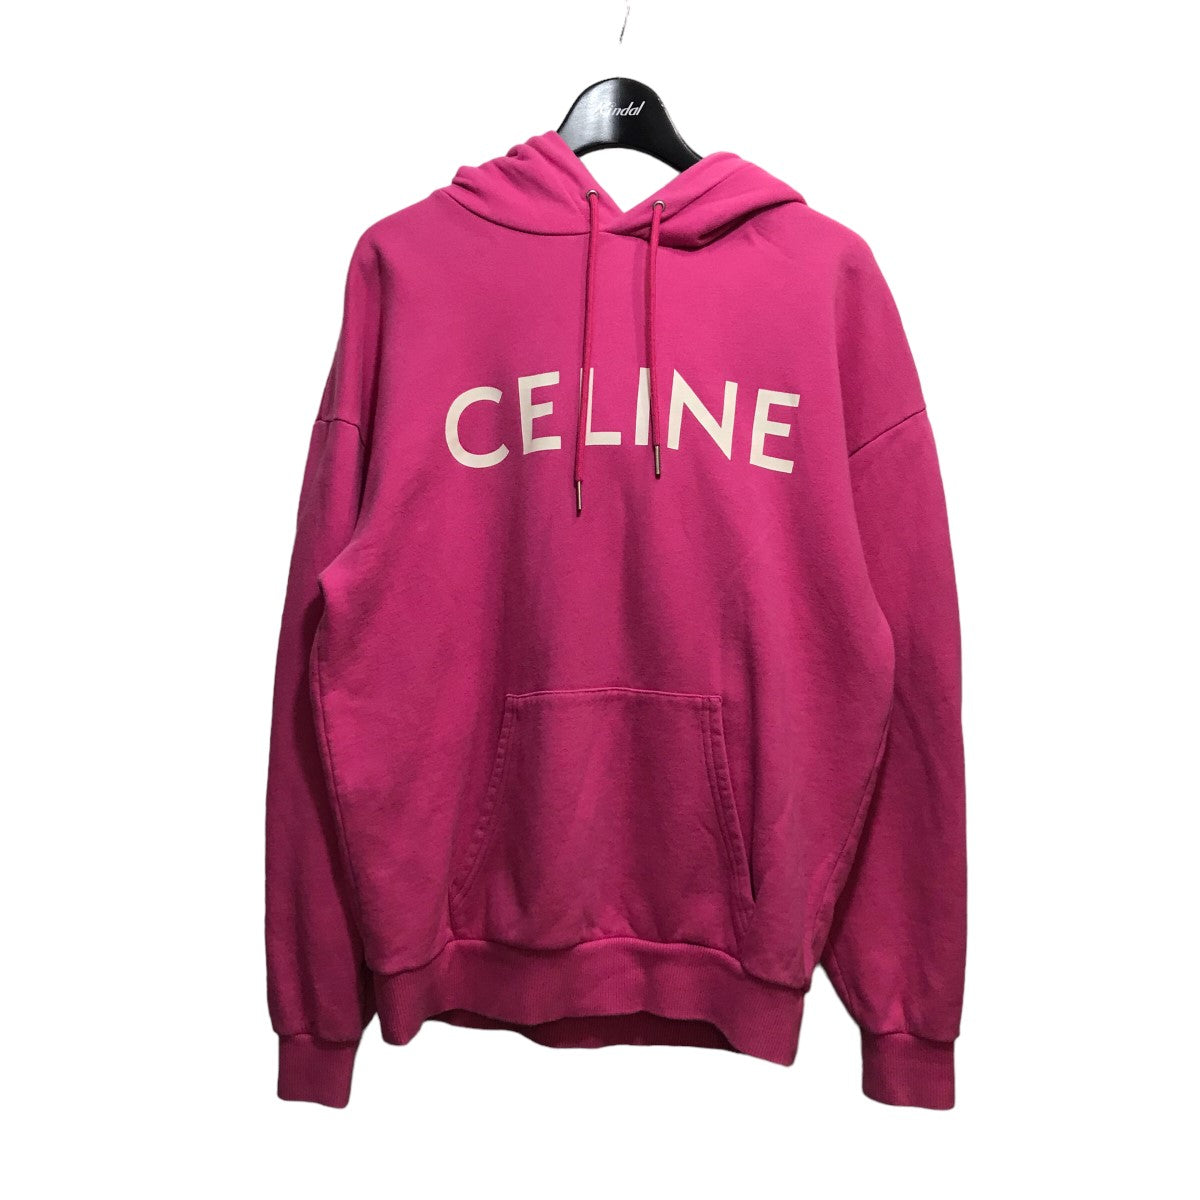 CELINE(セリーヌ) ルーズスウェットシャツ 2Y369052H 2Y369052H ピンク 